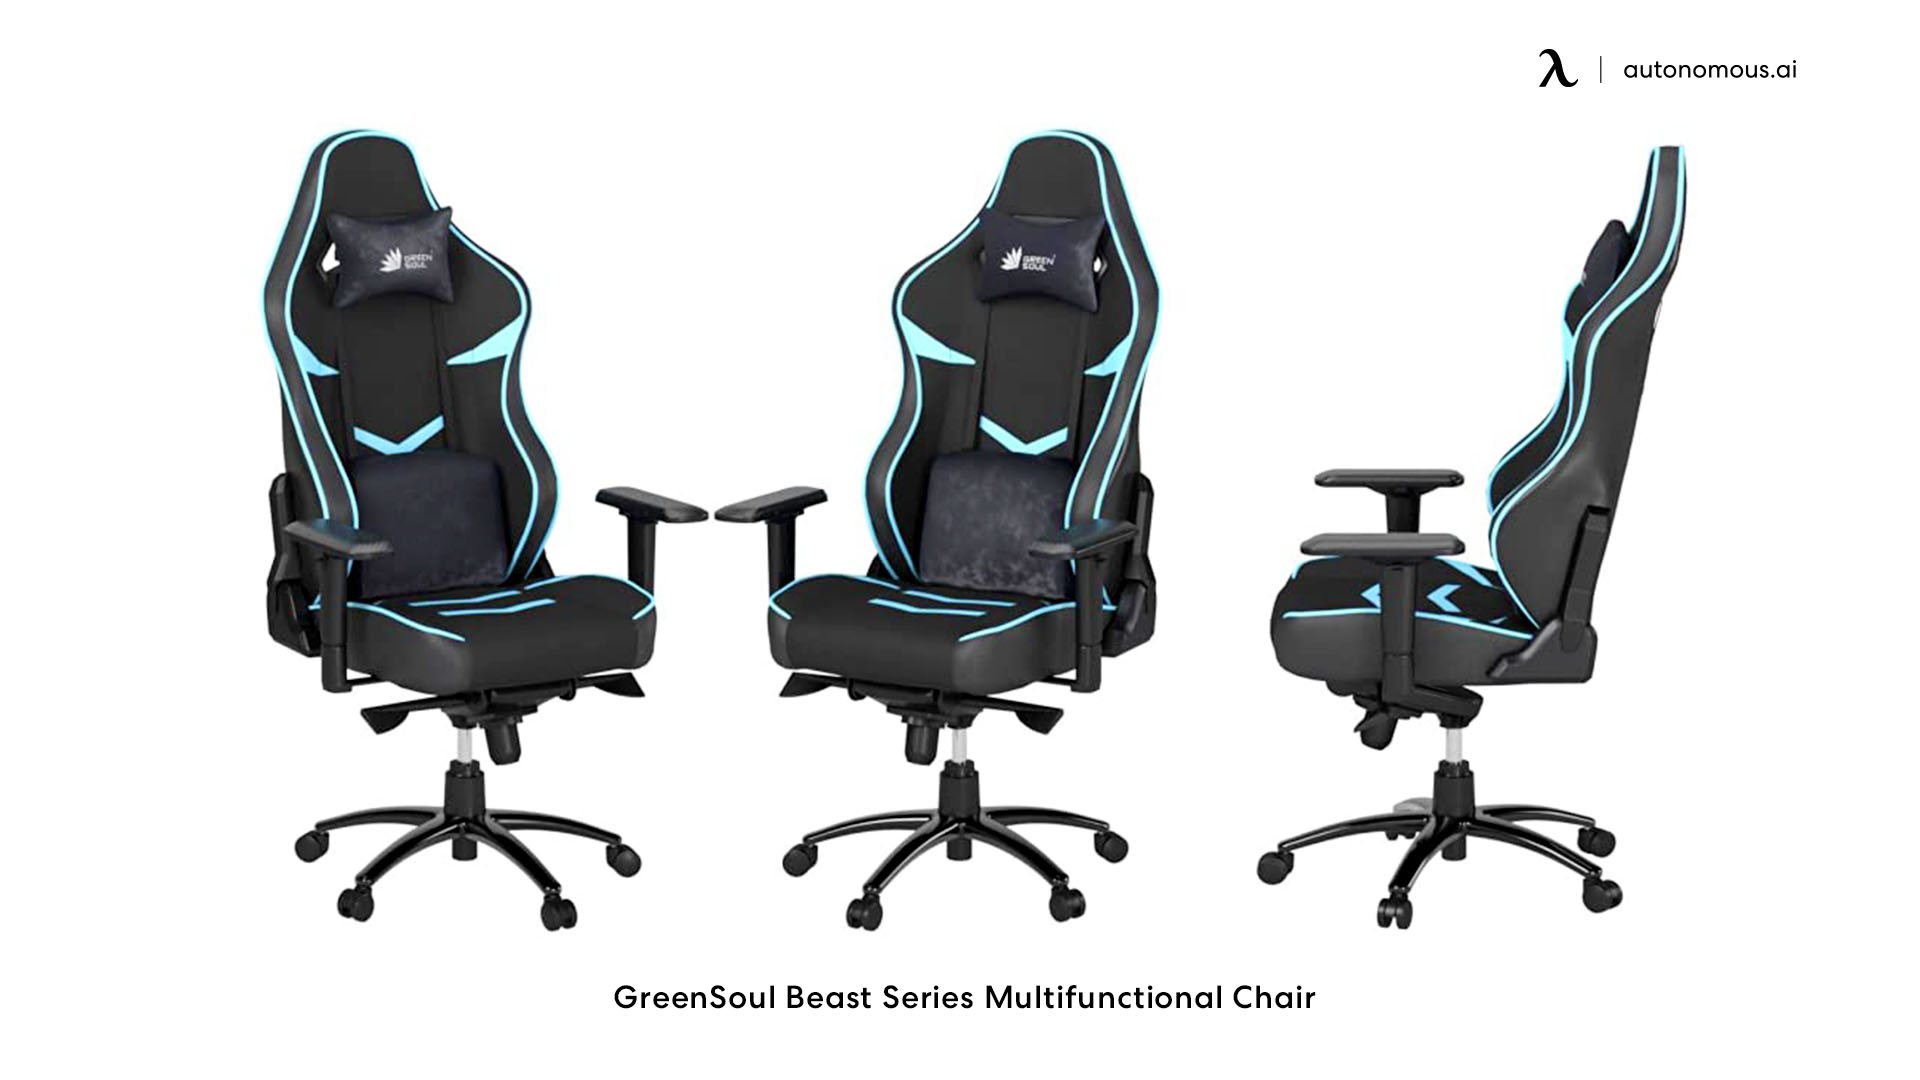 GreenSoul beast series multifunctional chair